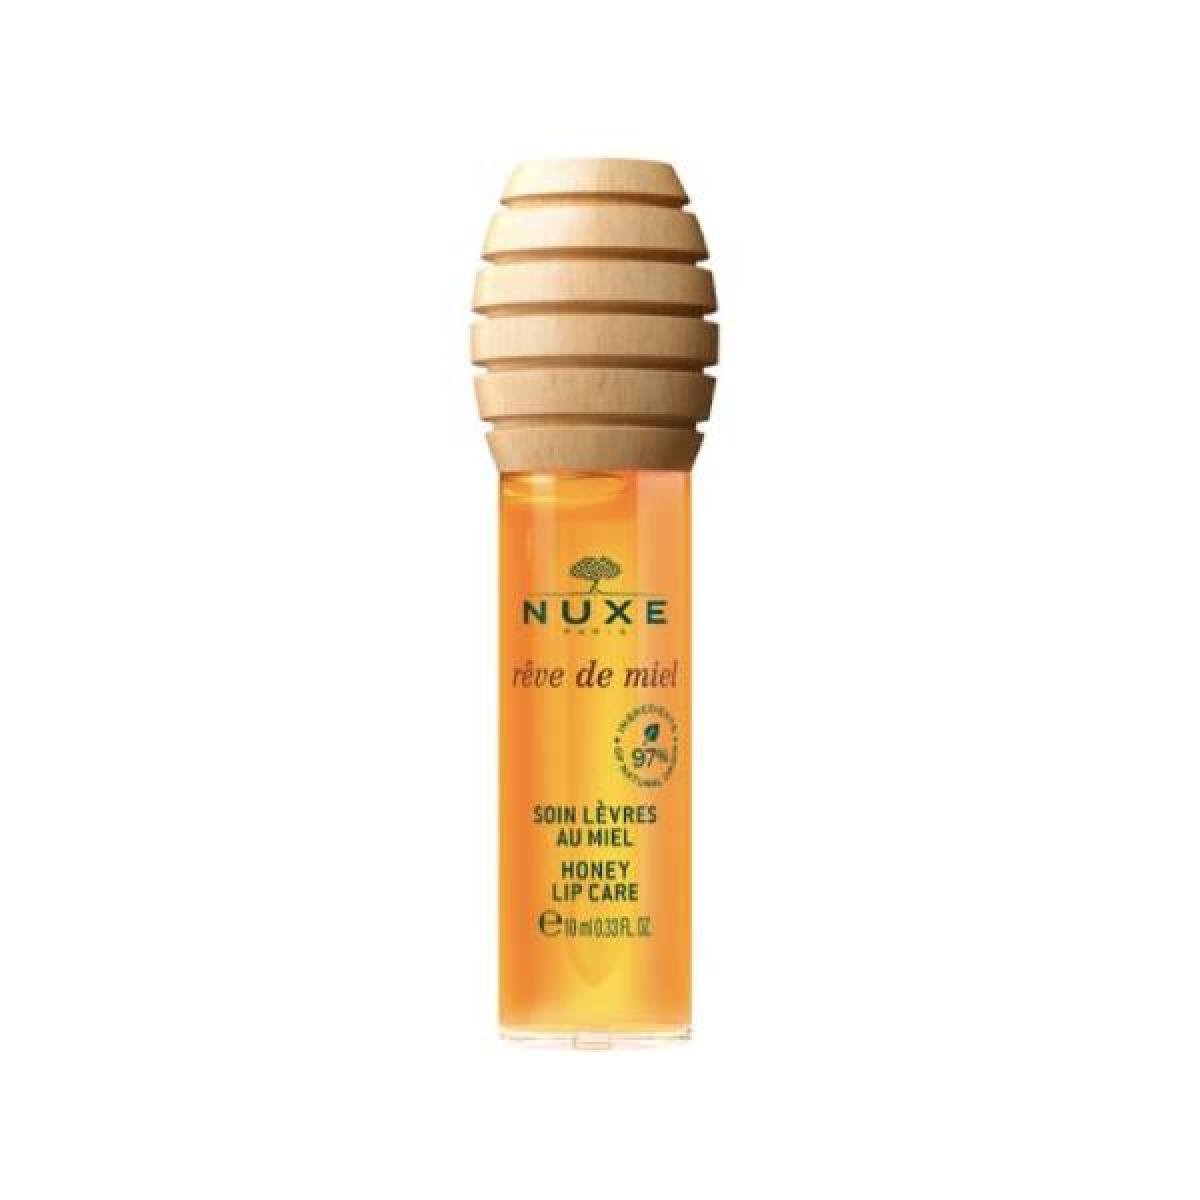 NUXE Rêve de miel soin lèvres au miel 10ml - Parapharmacie - Pharmarket